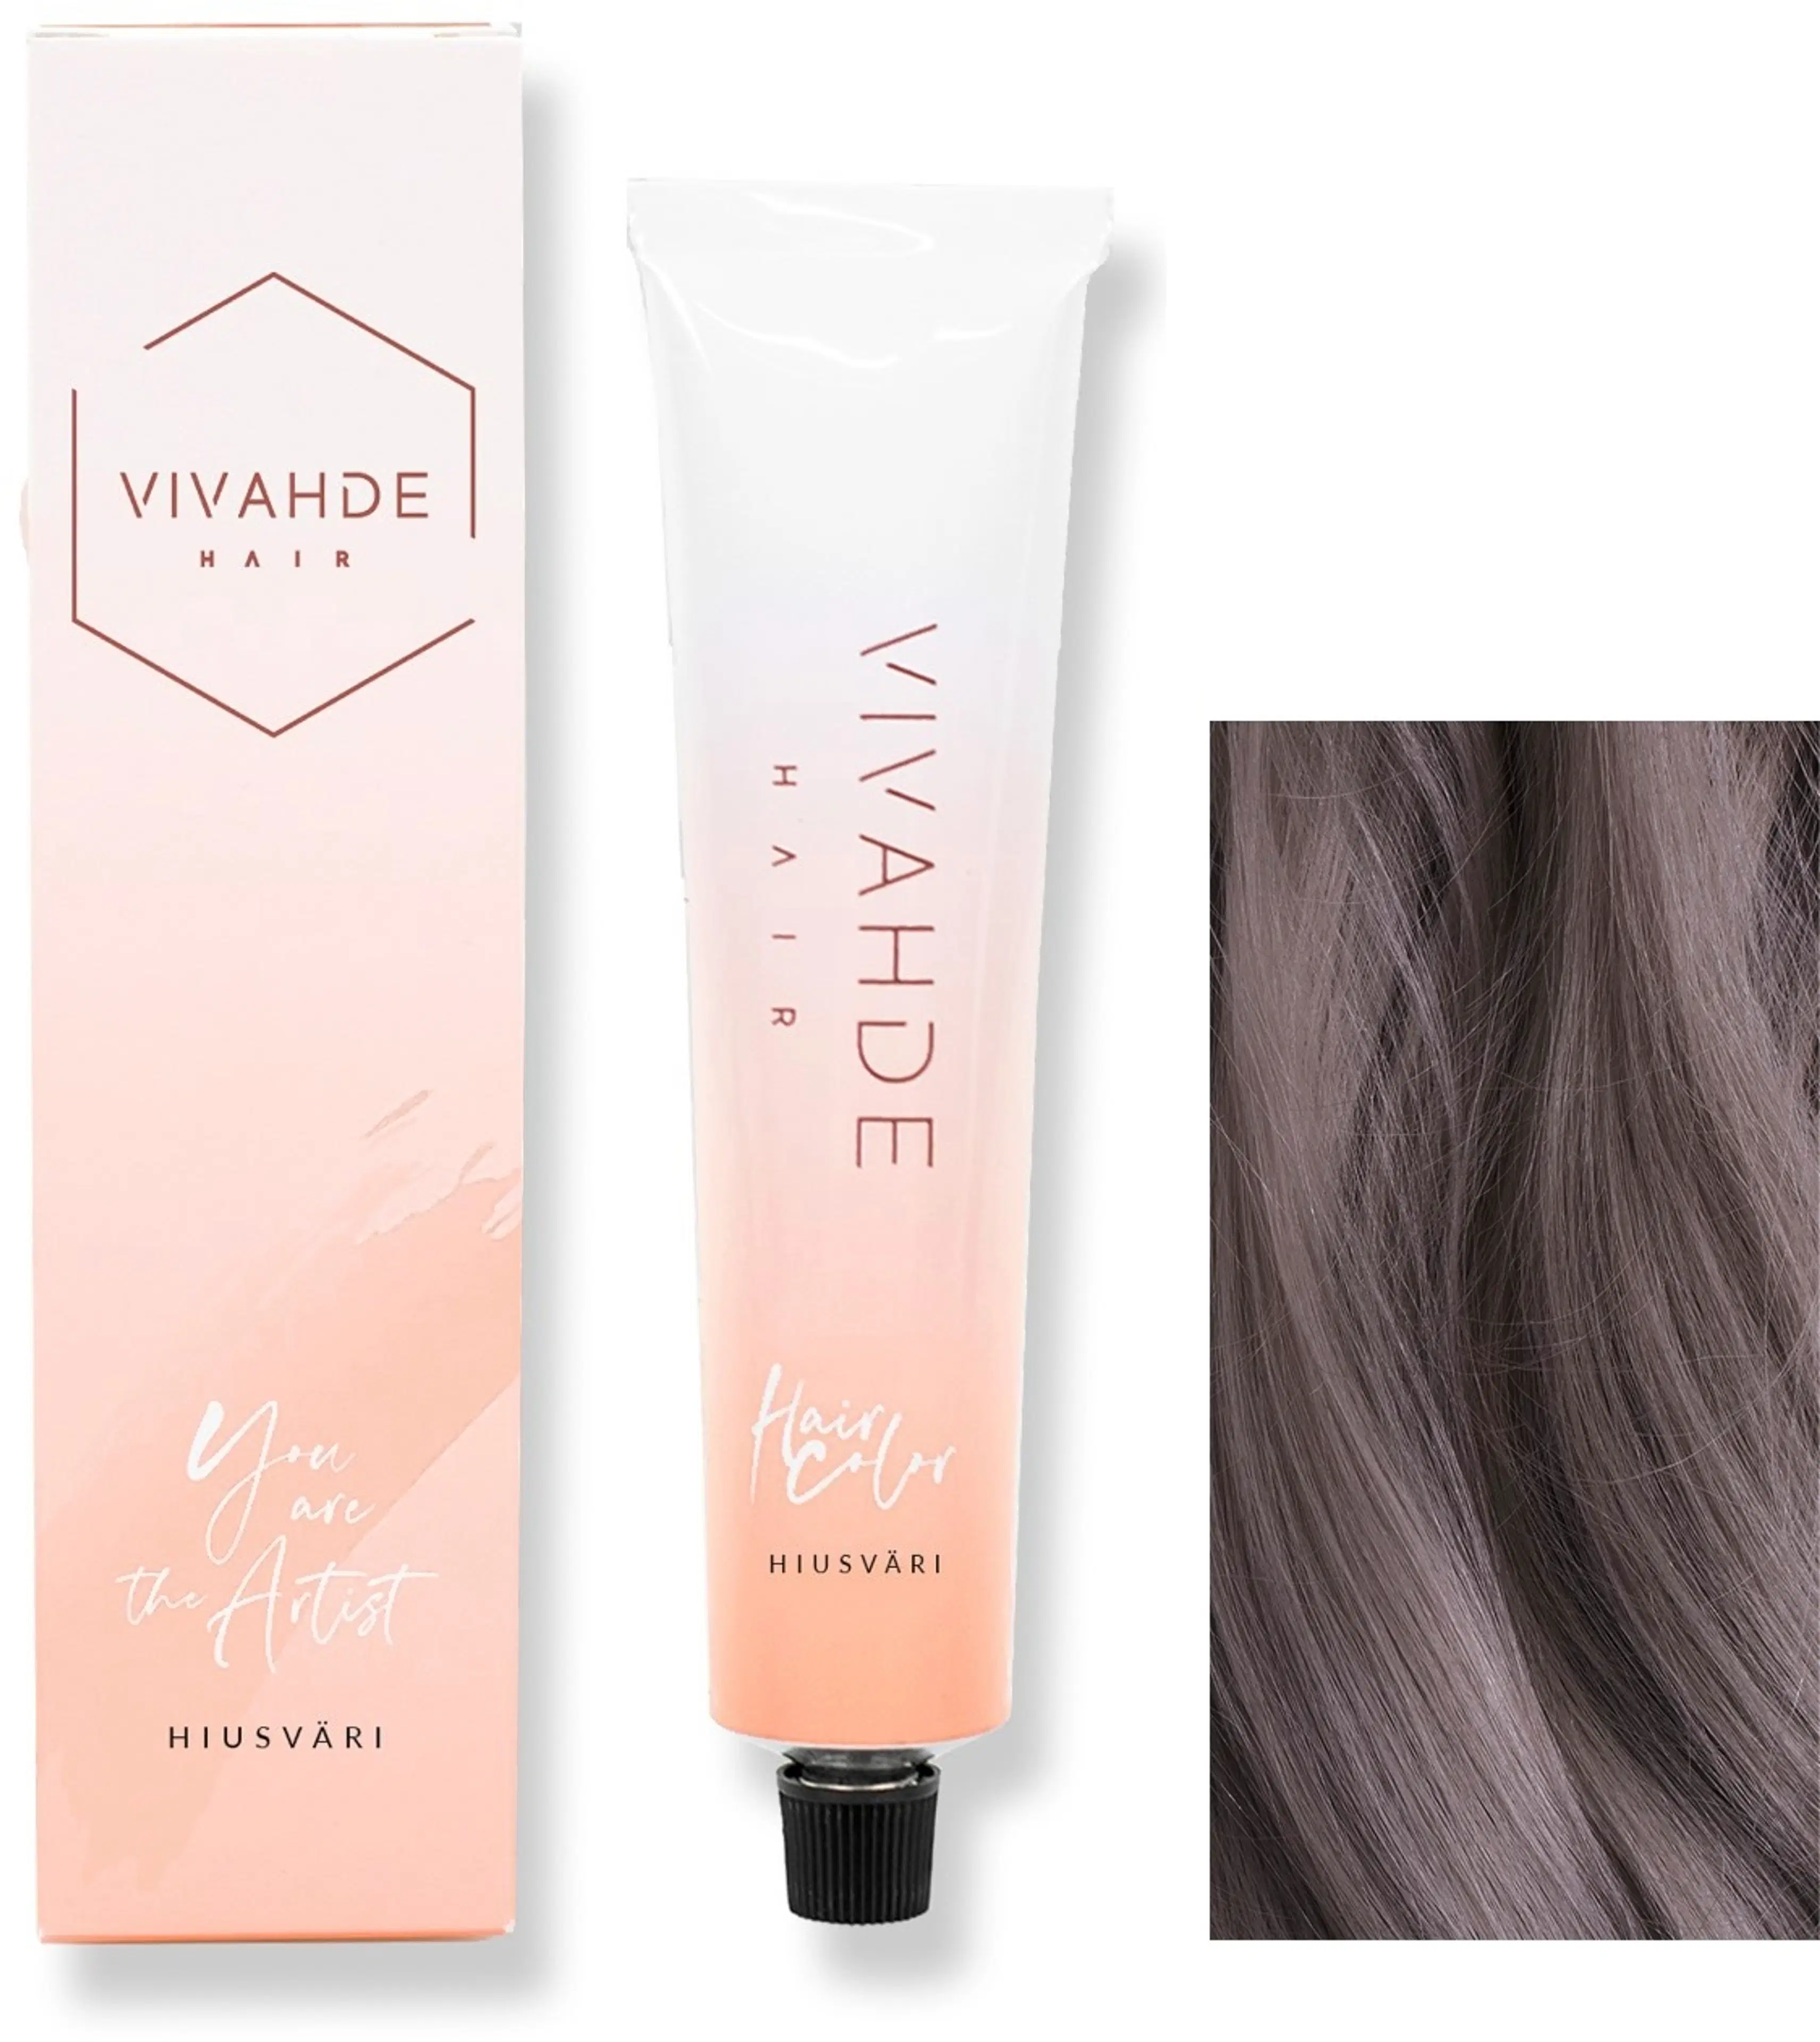 Vivahde Hair 8 NV Neutraali Violetti hiusväri  60 ml